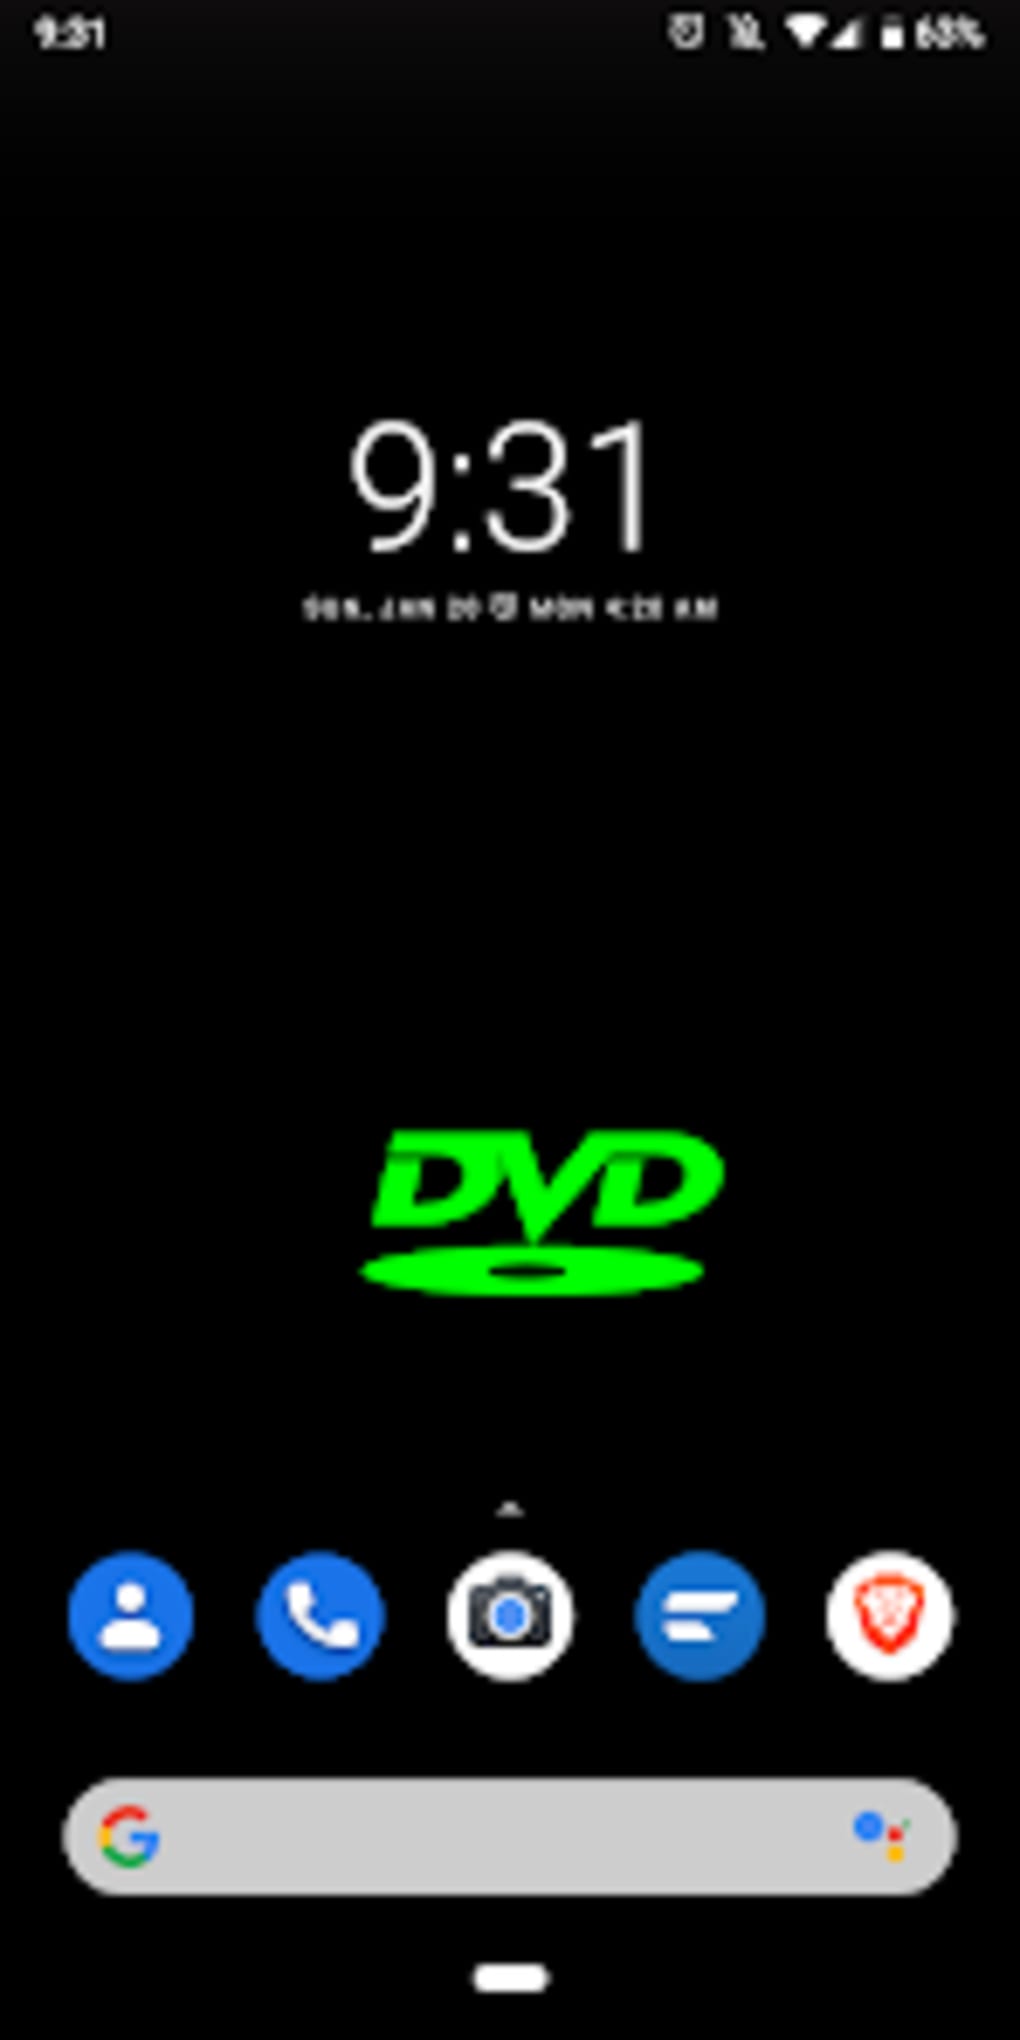 DVD Screensaver APK (Android App) - Free Download